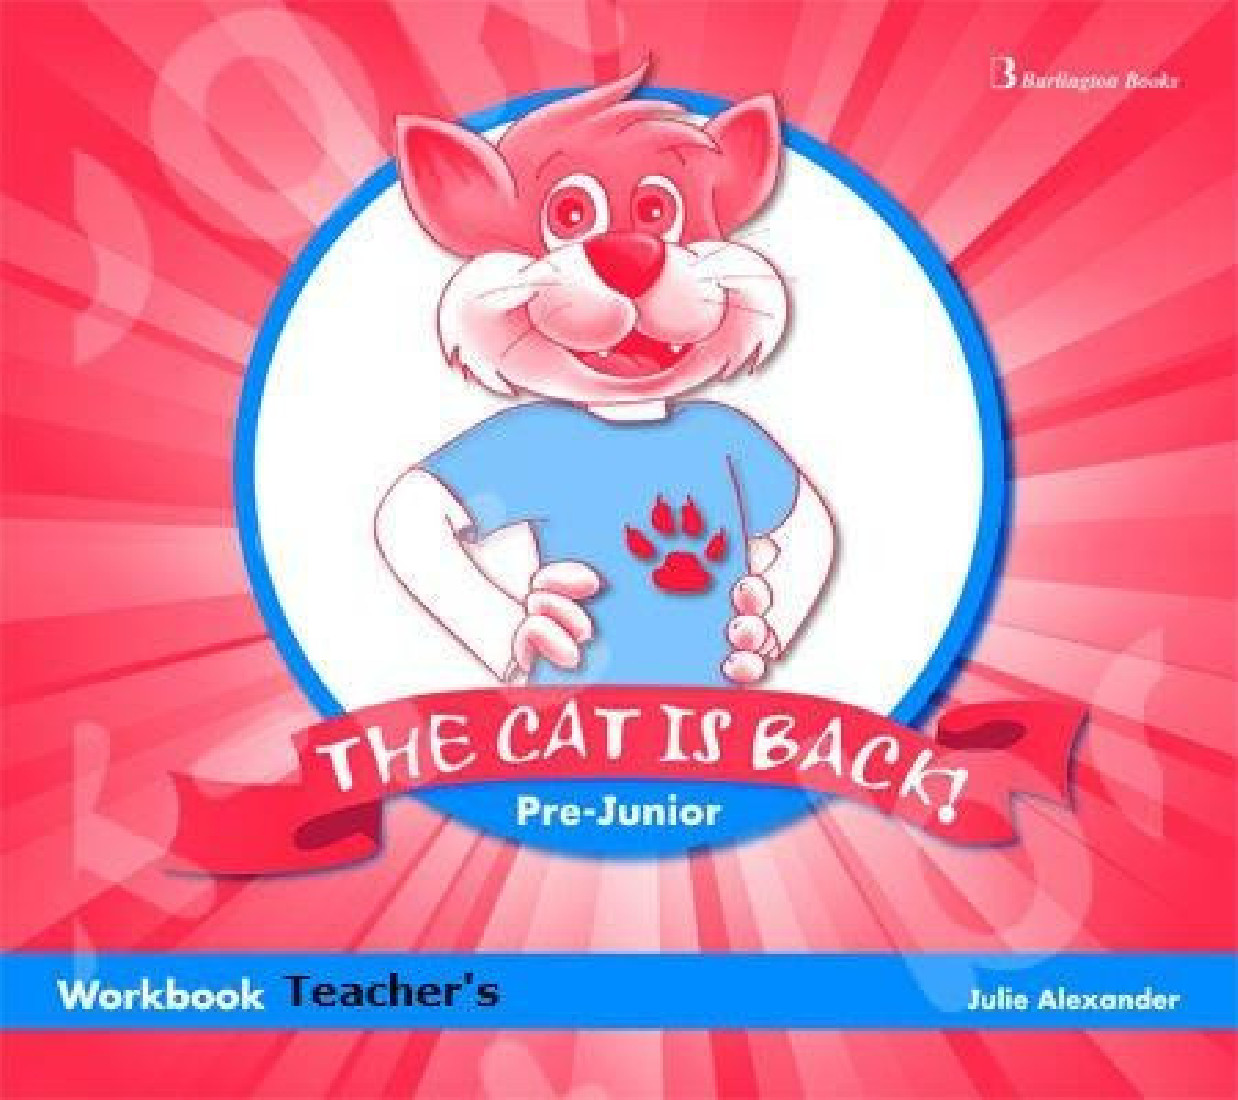 THE CAT IS BACK! PRE-JUNIOR WORKBOOK TEACHERS